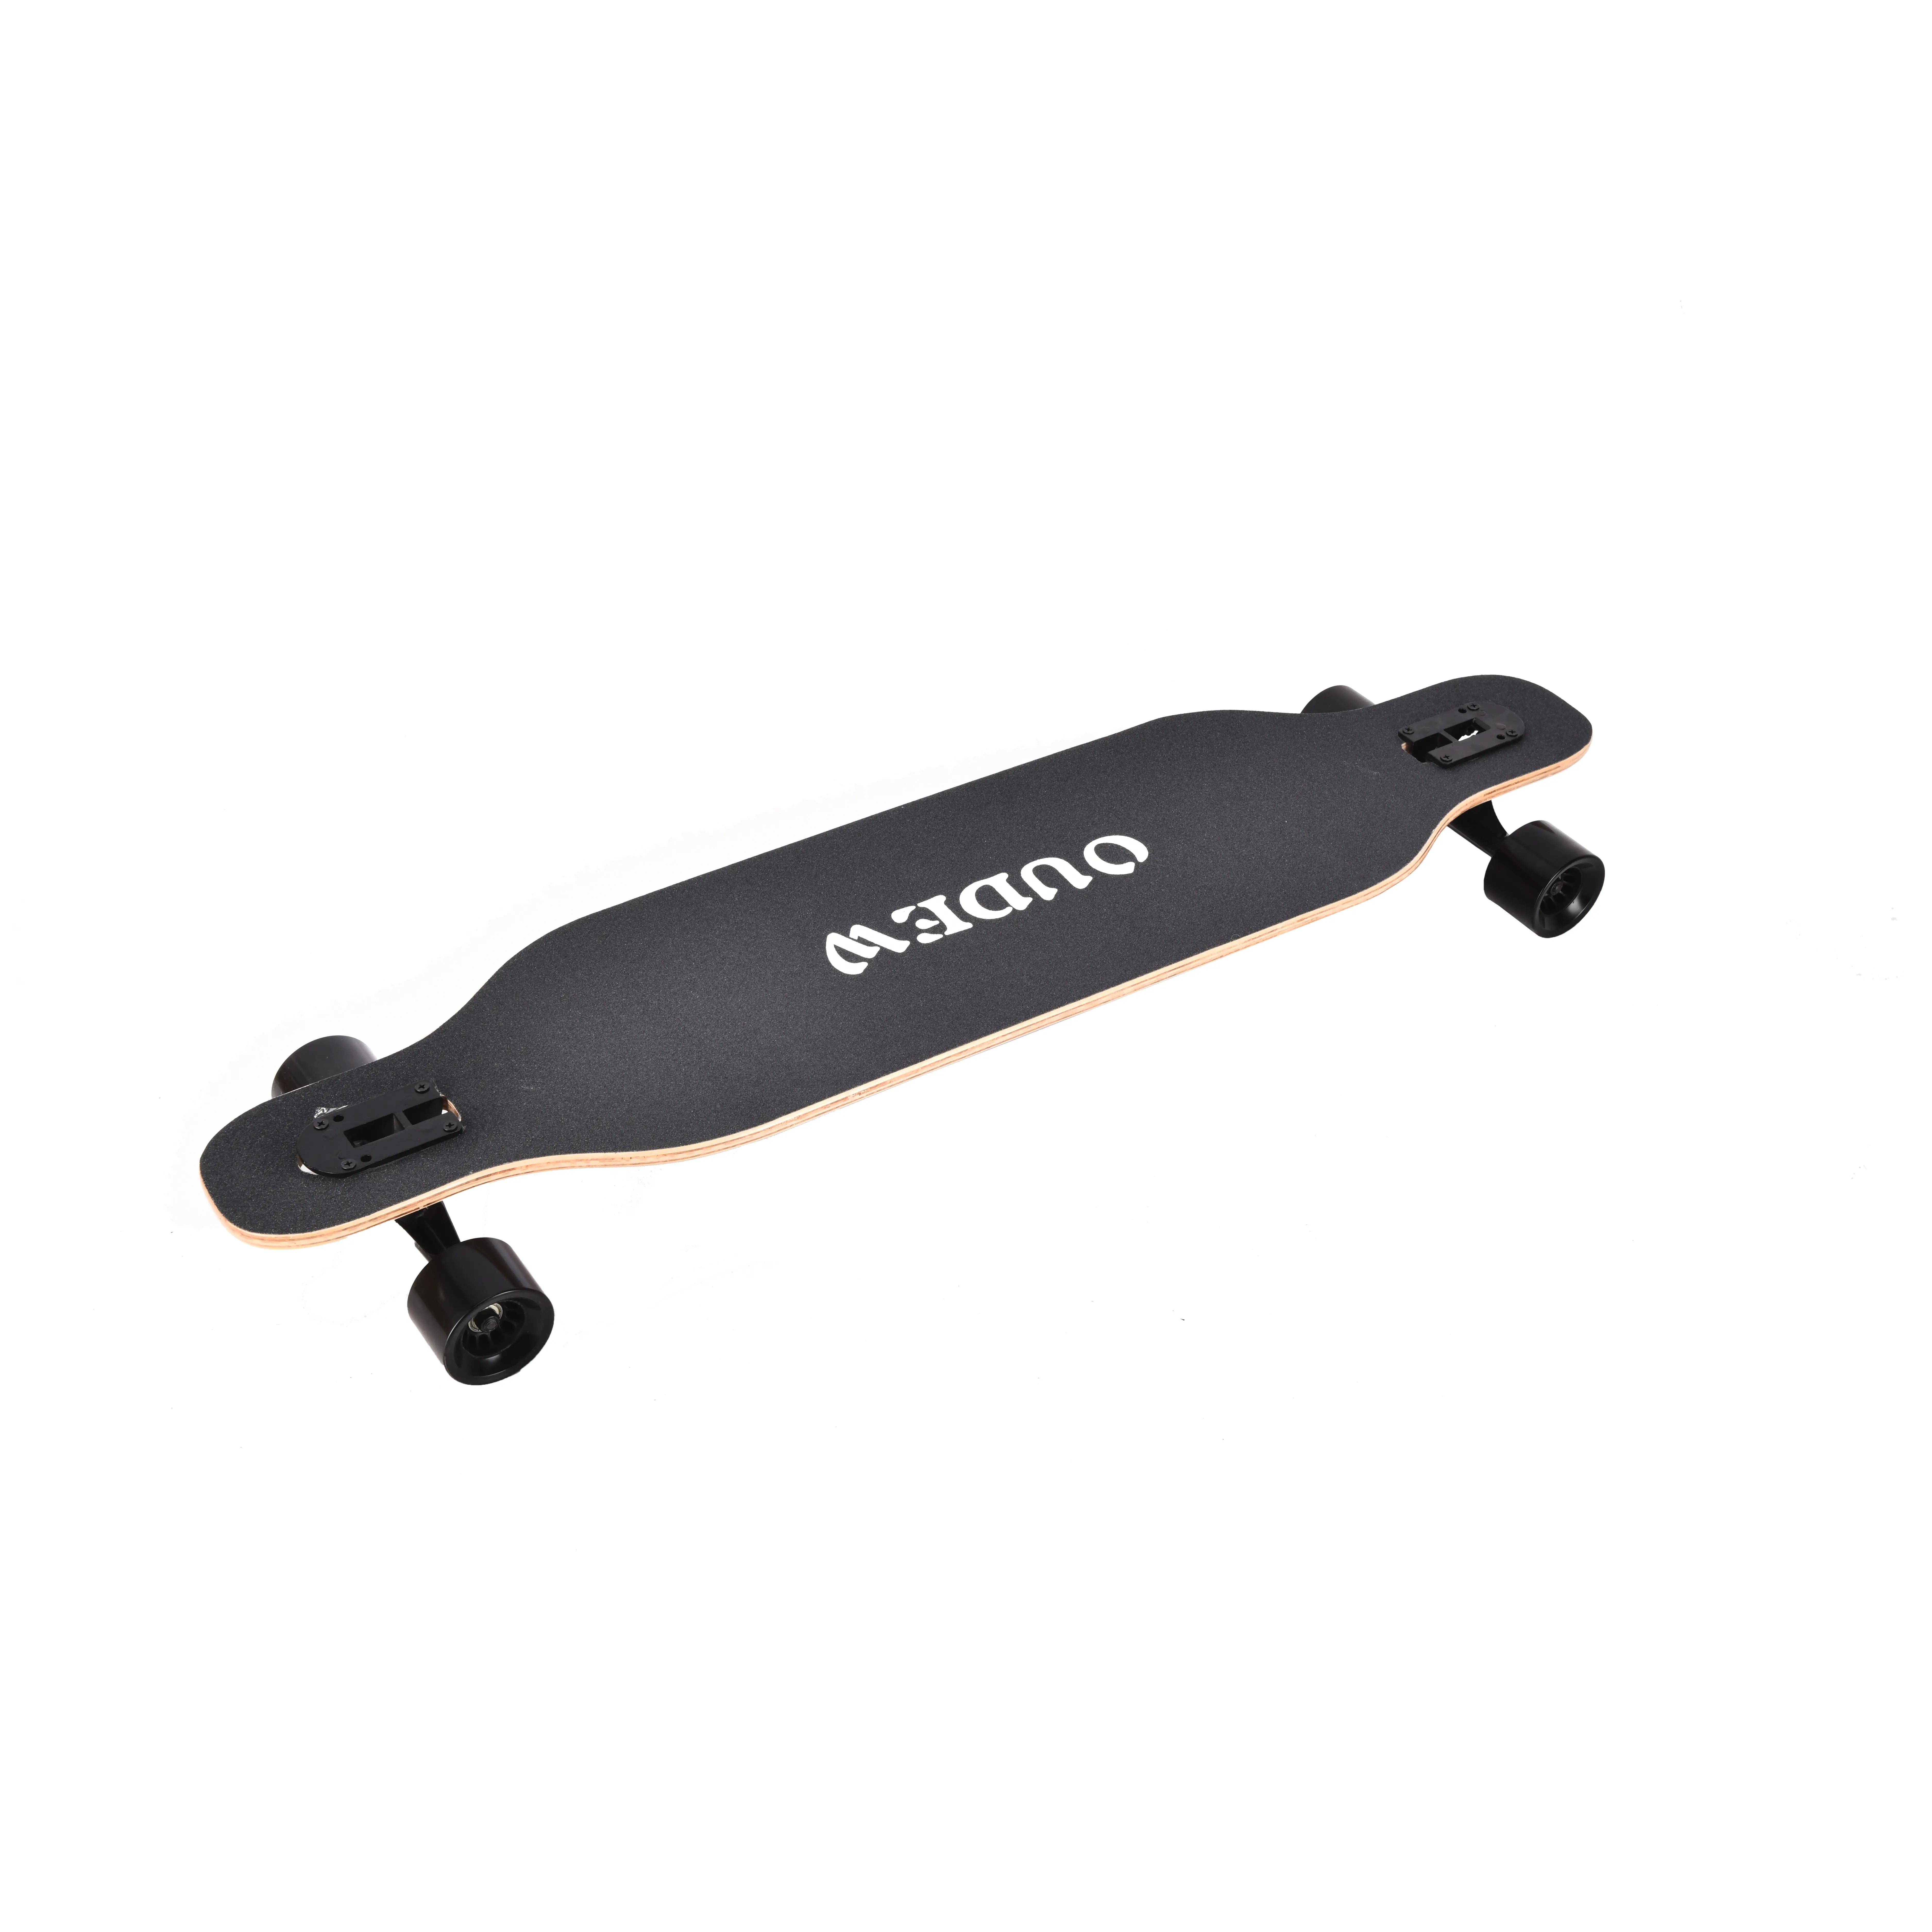 factory direct Maple Complete Skateboard professional Longboard Skate Board Trick Board for Teenagers